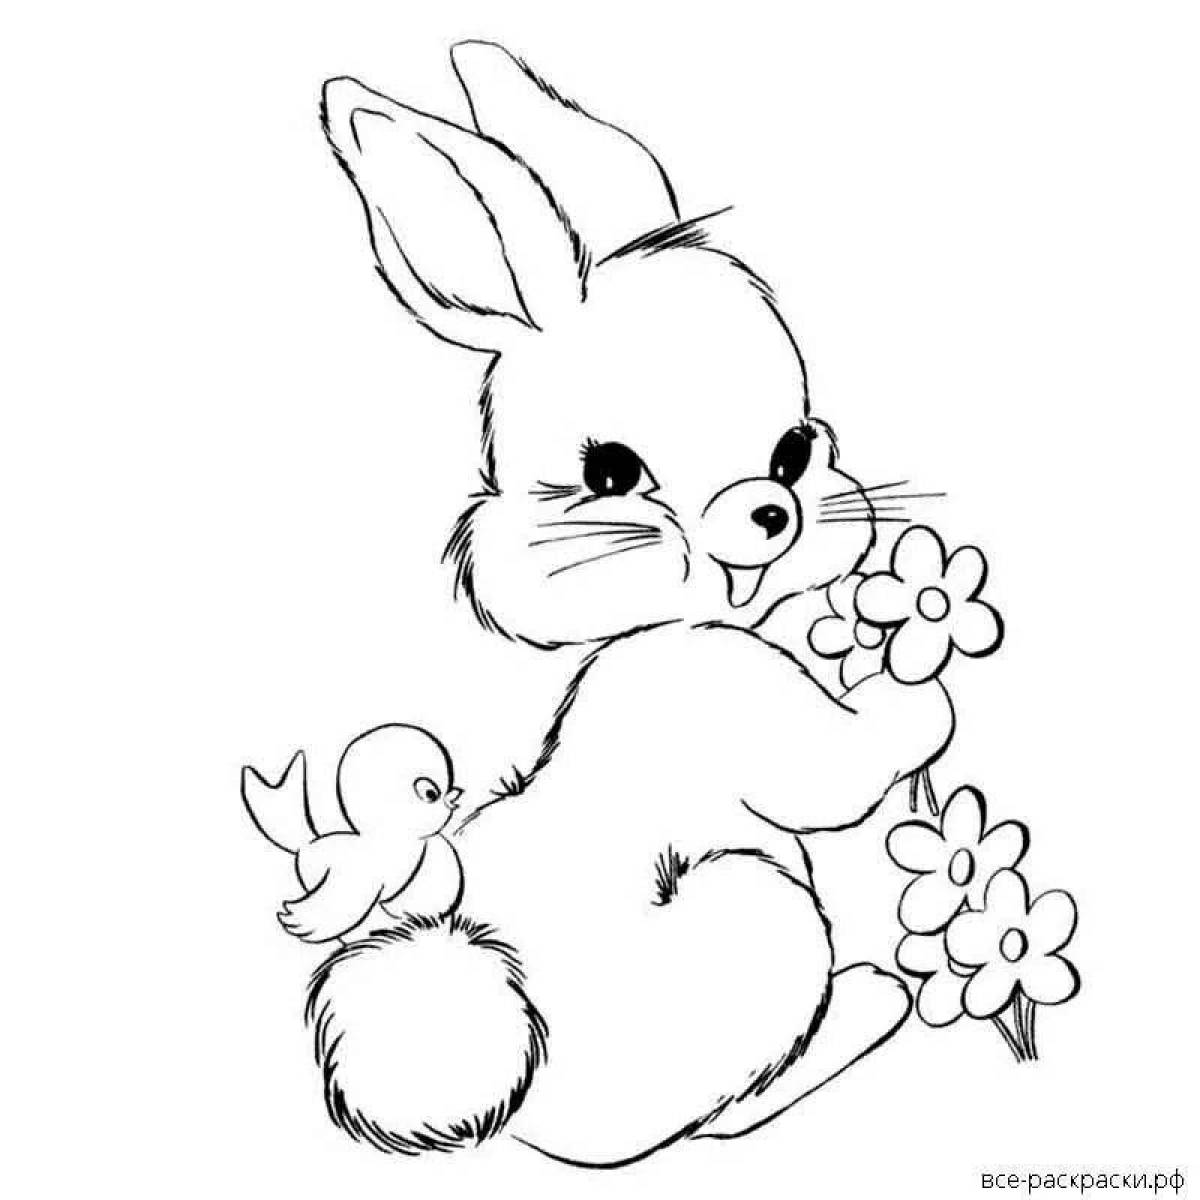 Fun coloring cat and rabbit